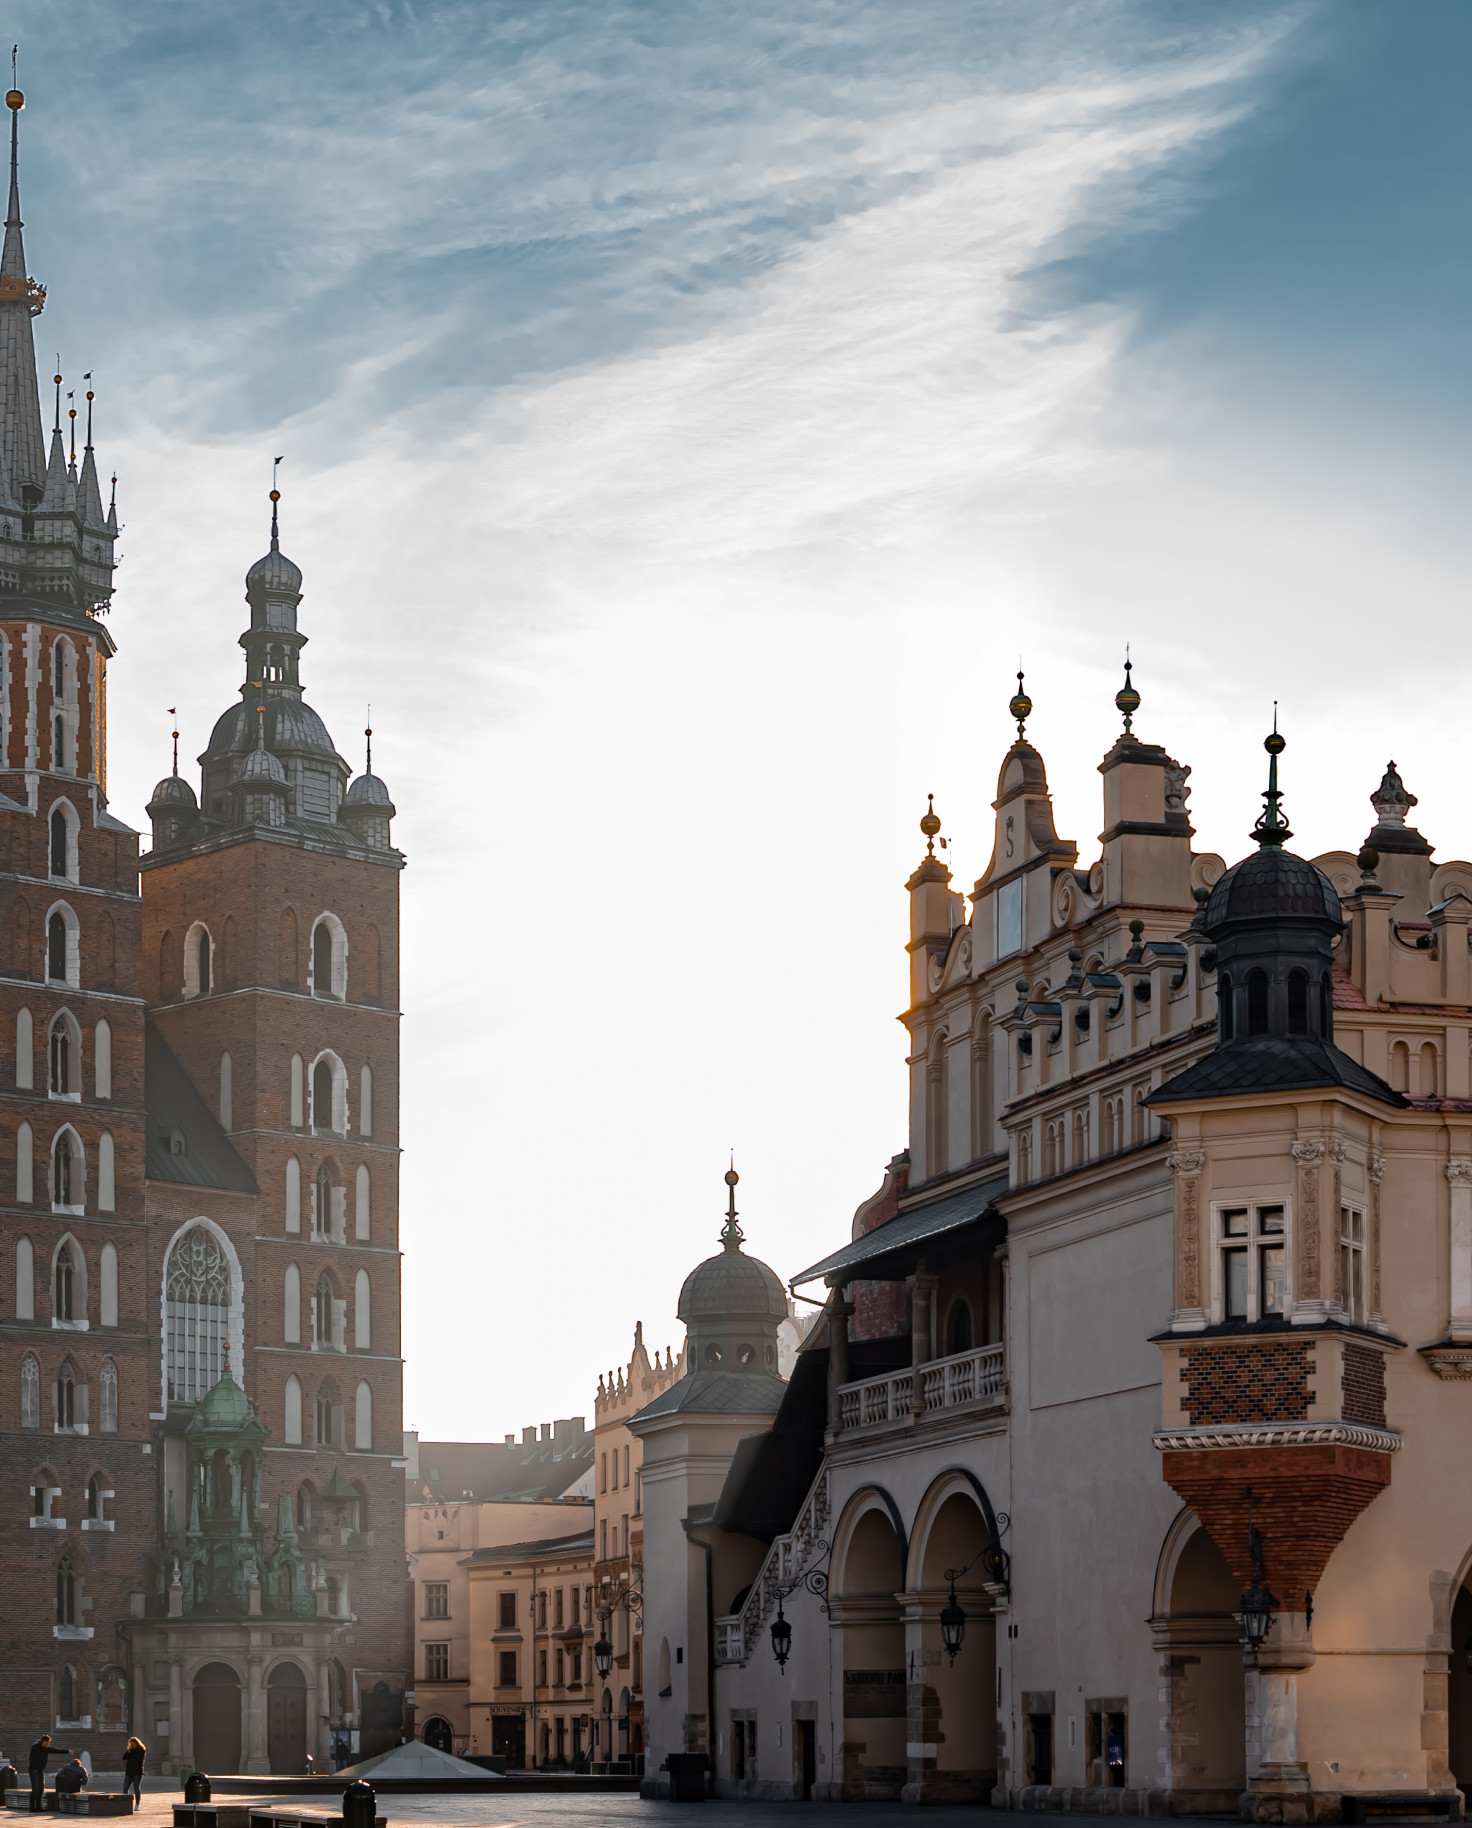 Historic building in Krakow, Poland under a blue sky